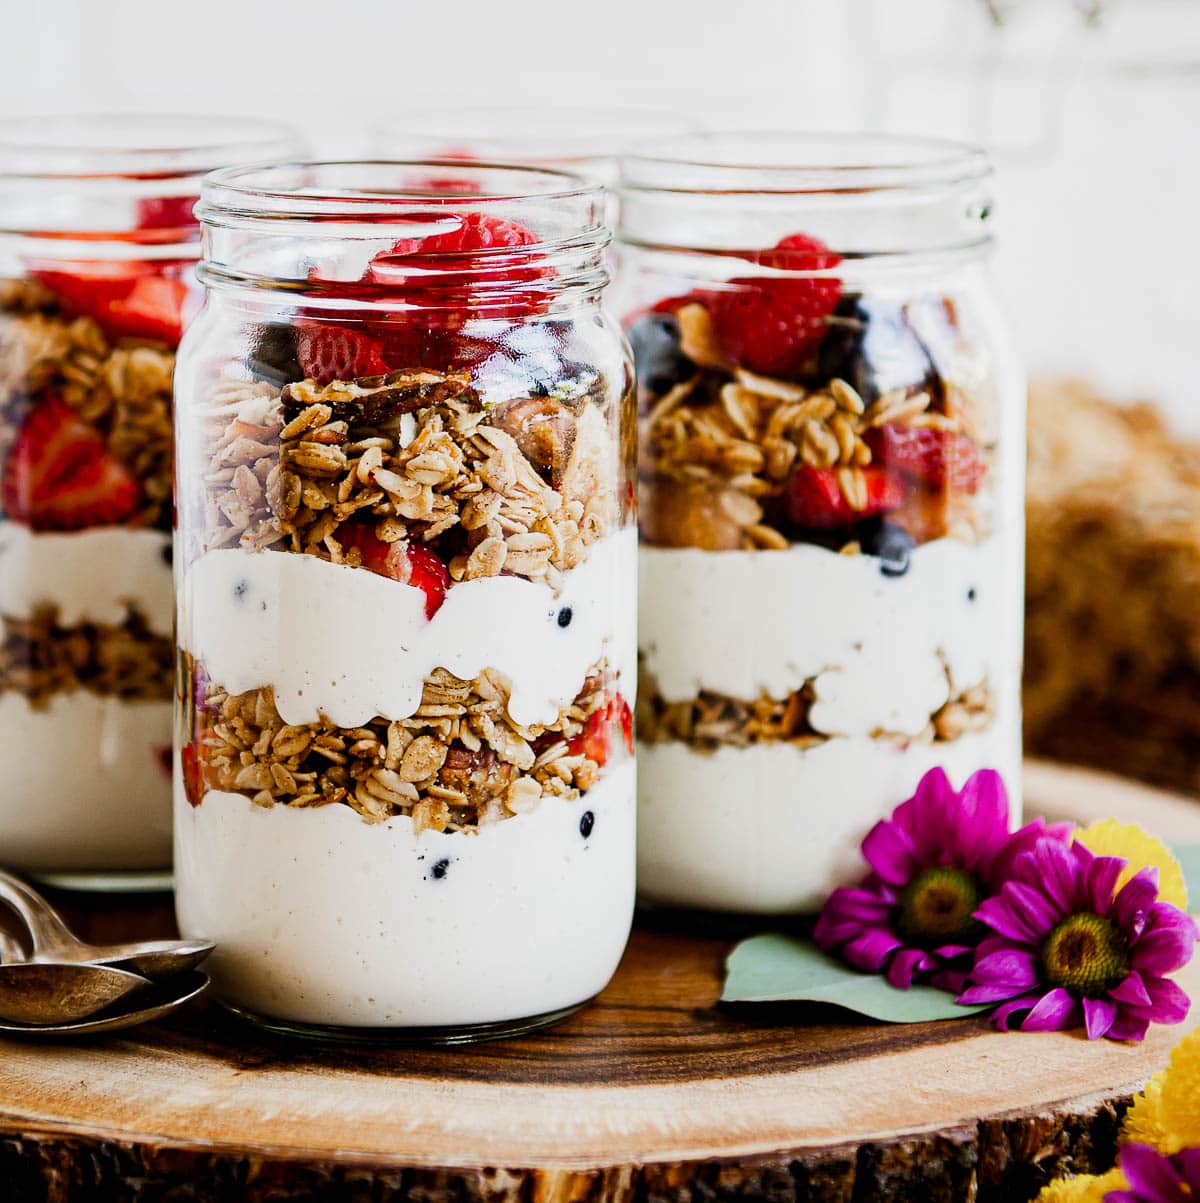 vegan yogurt parfaits that include gluten free granola and fresh fruit in layers.